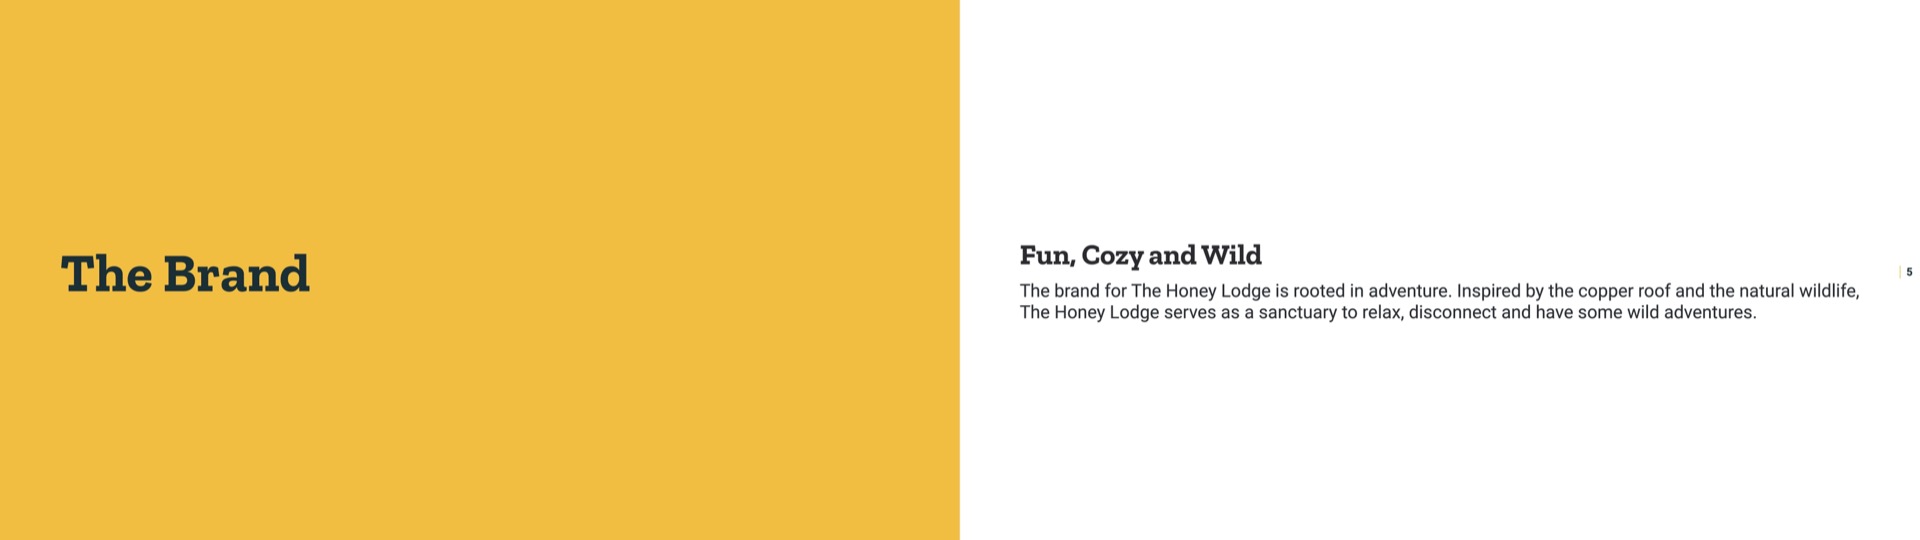 Honey Lodge - Brand Guide 19